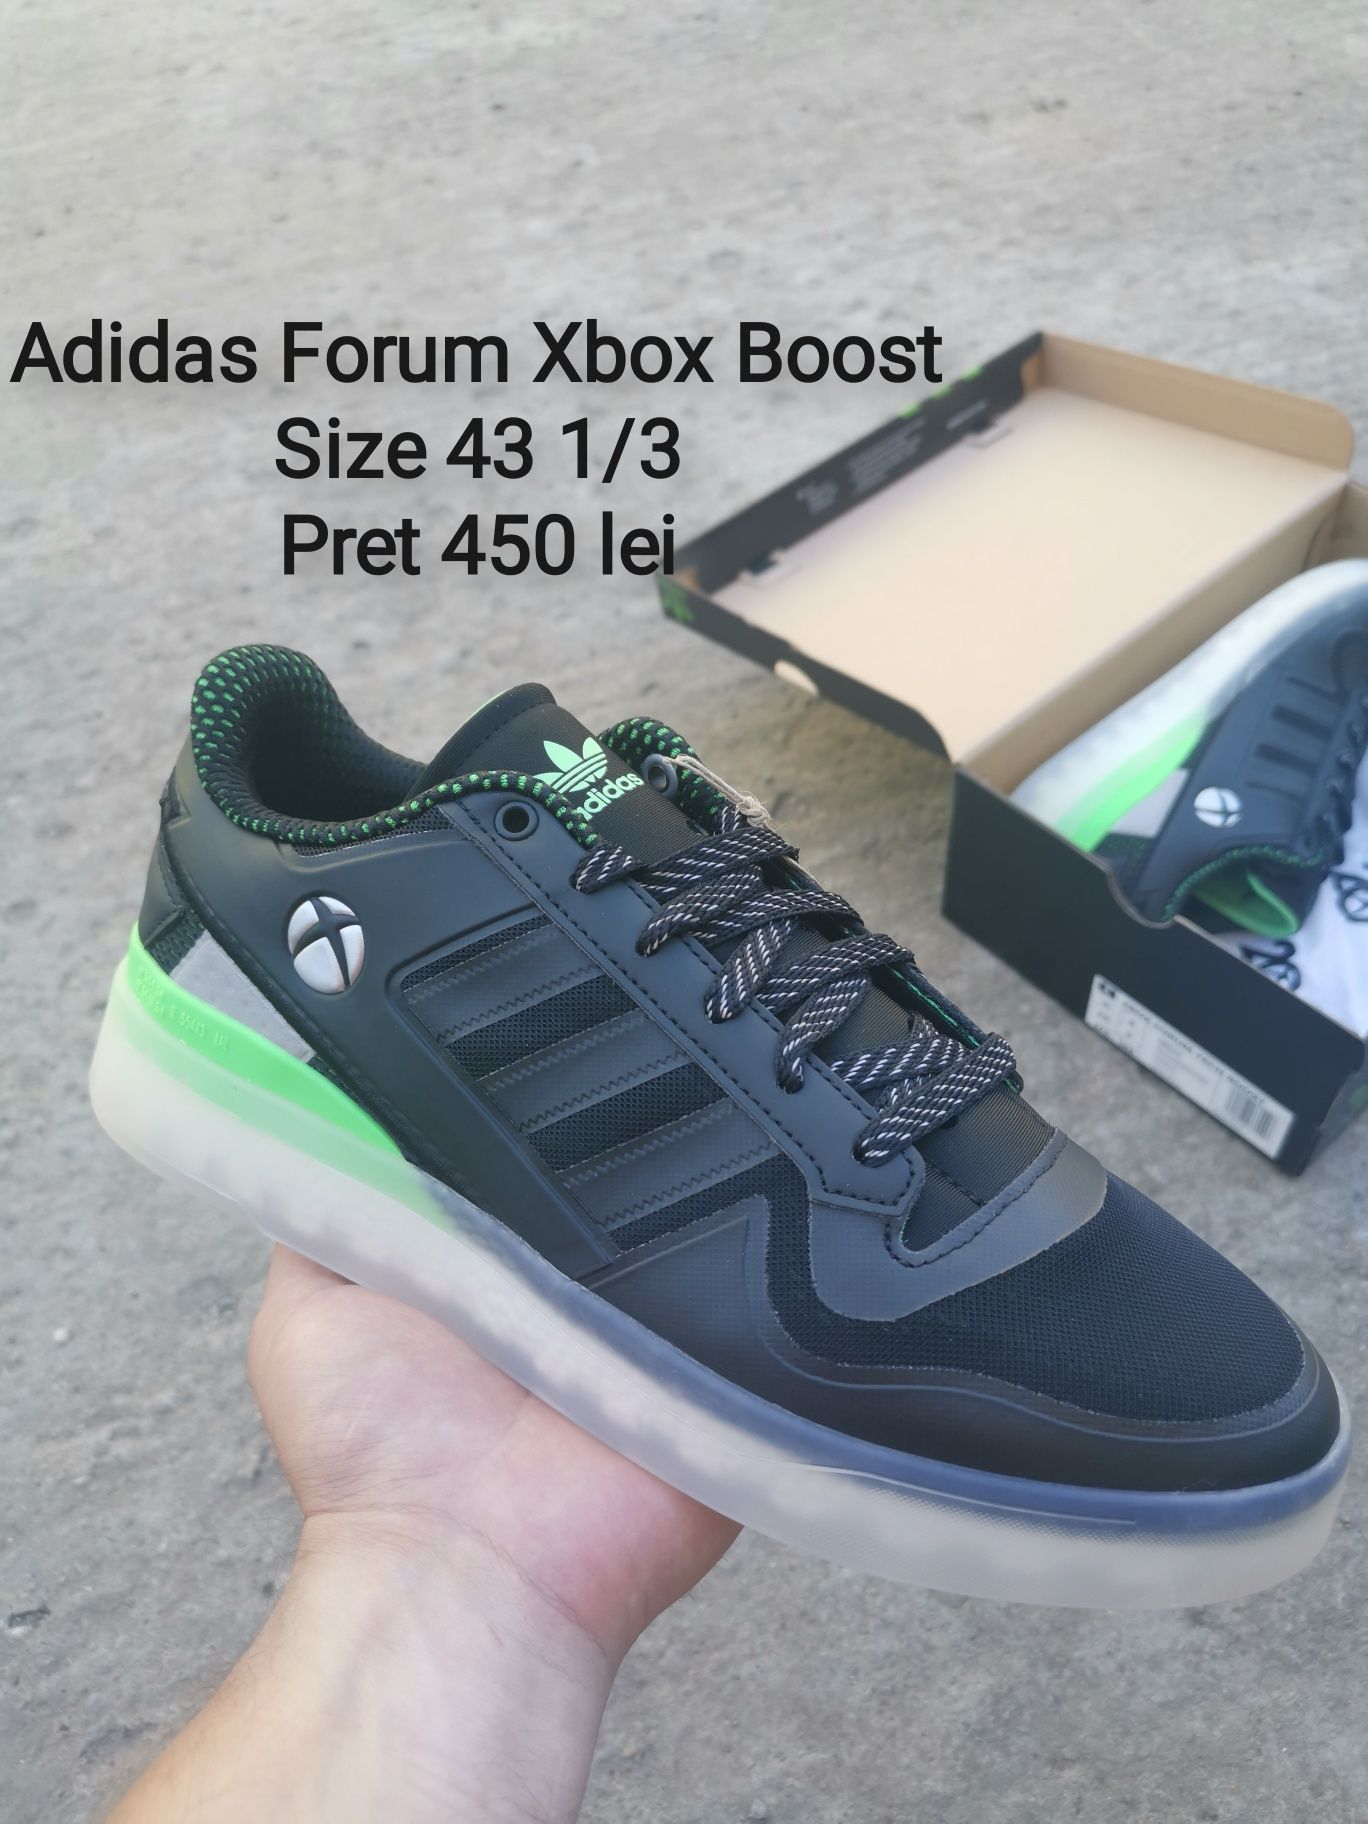 Adidas forum Xbox Boost